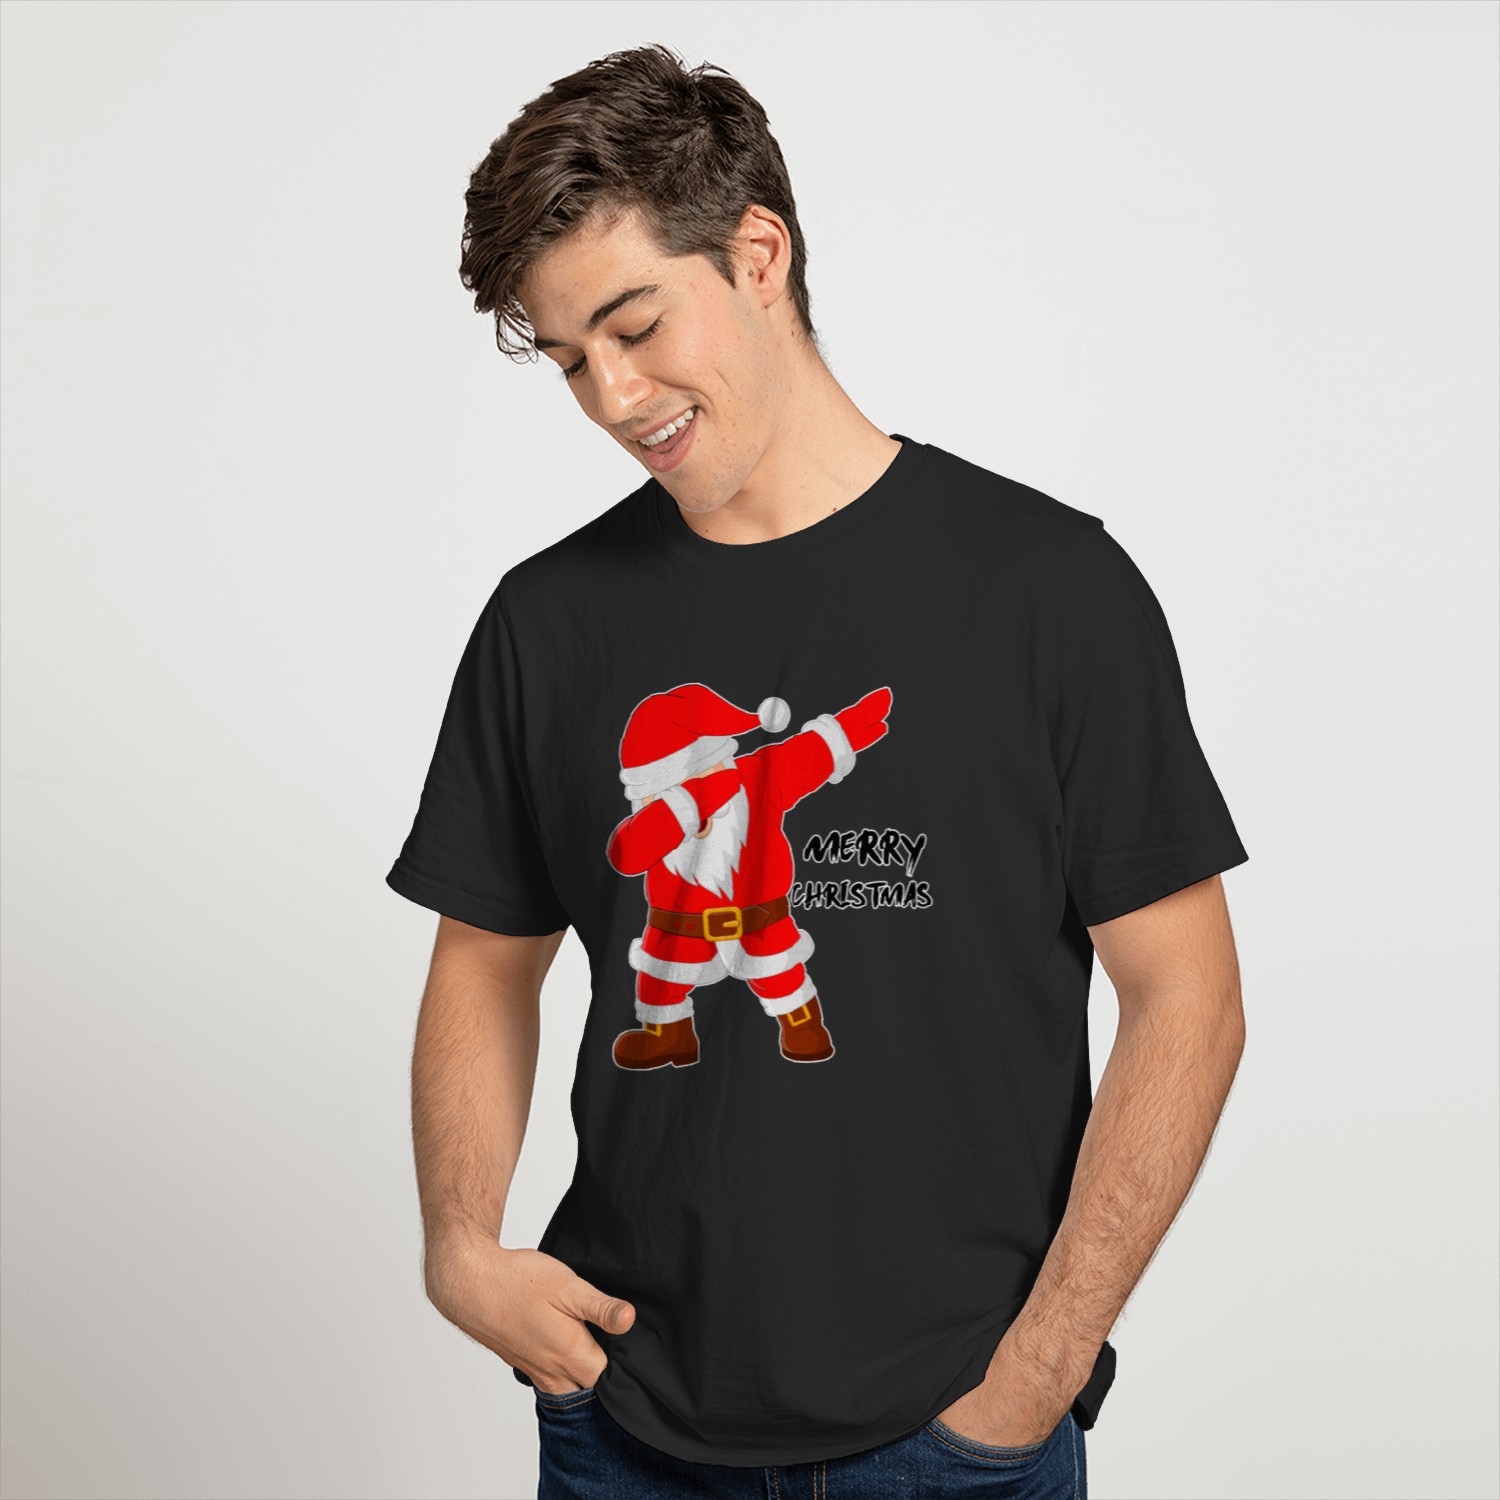 FUNNY SANTA CLAUS DADDING T-shirt